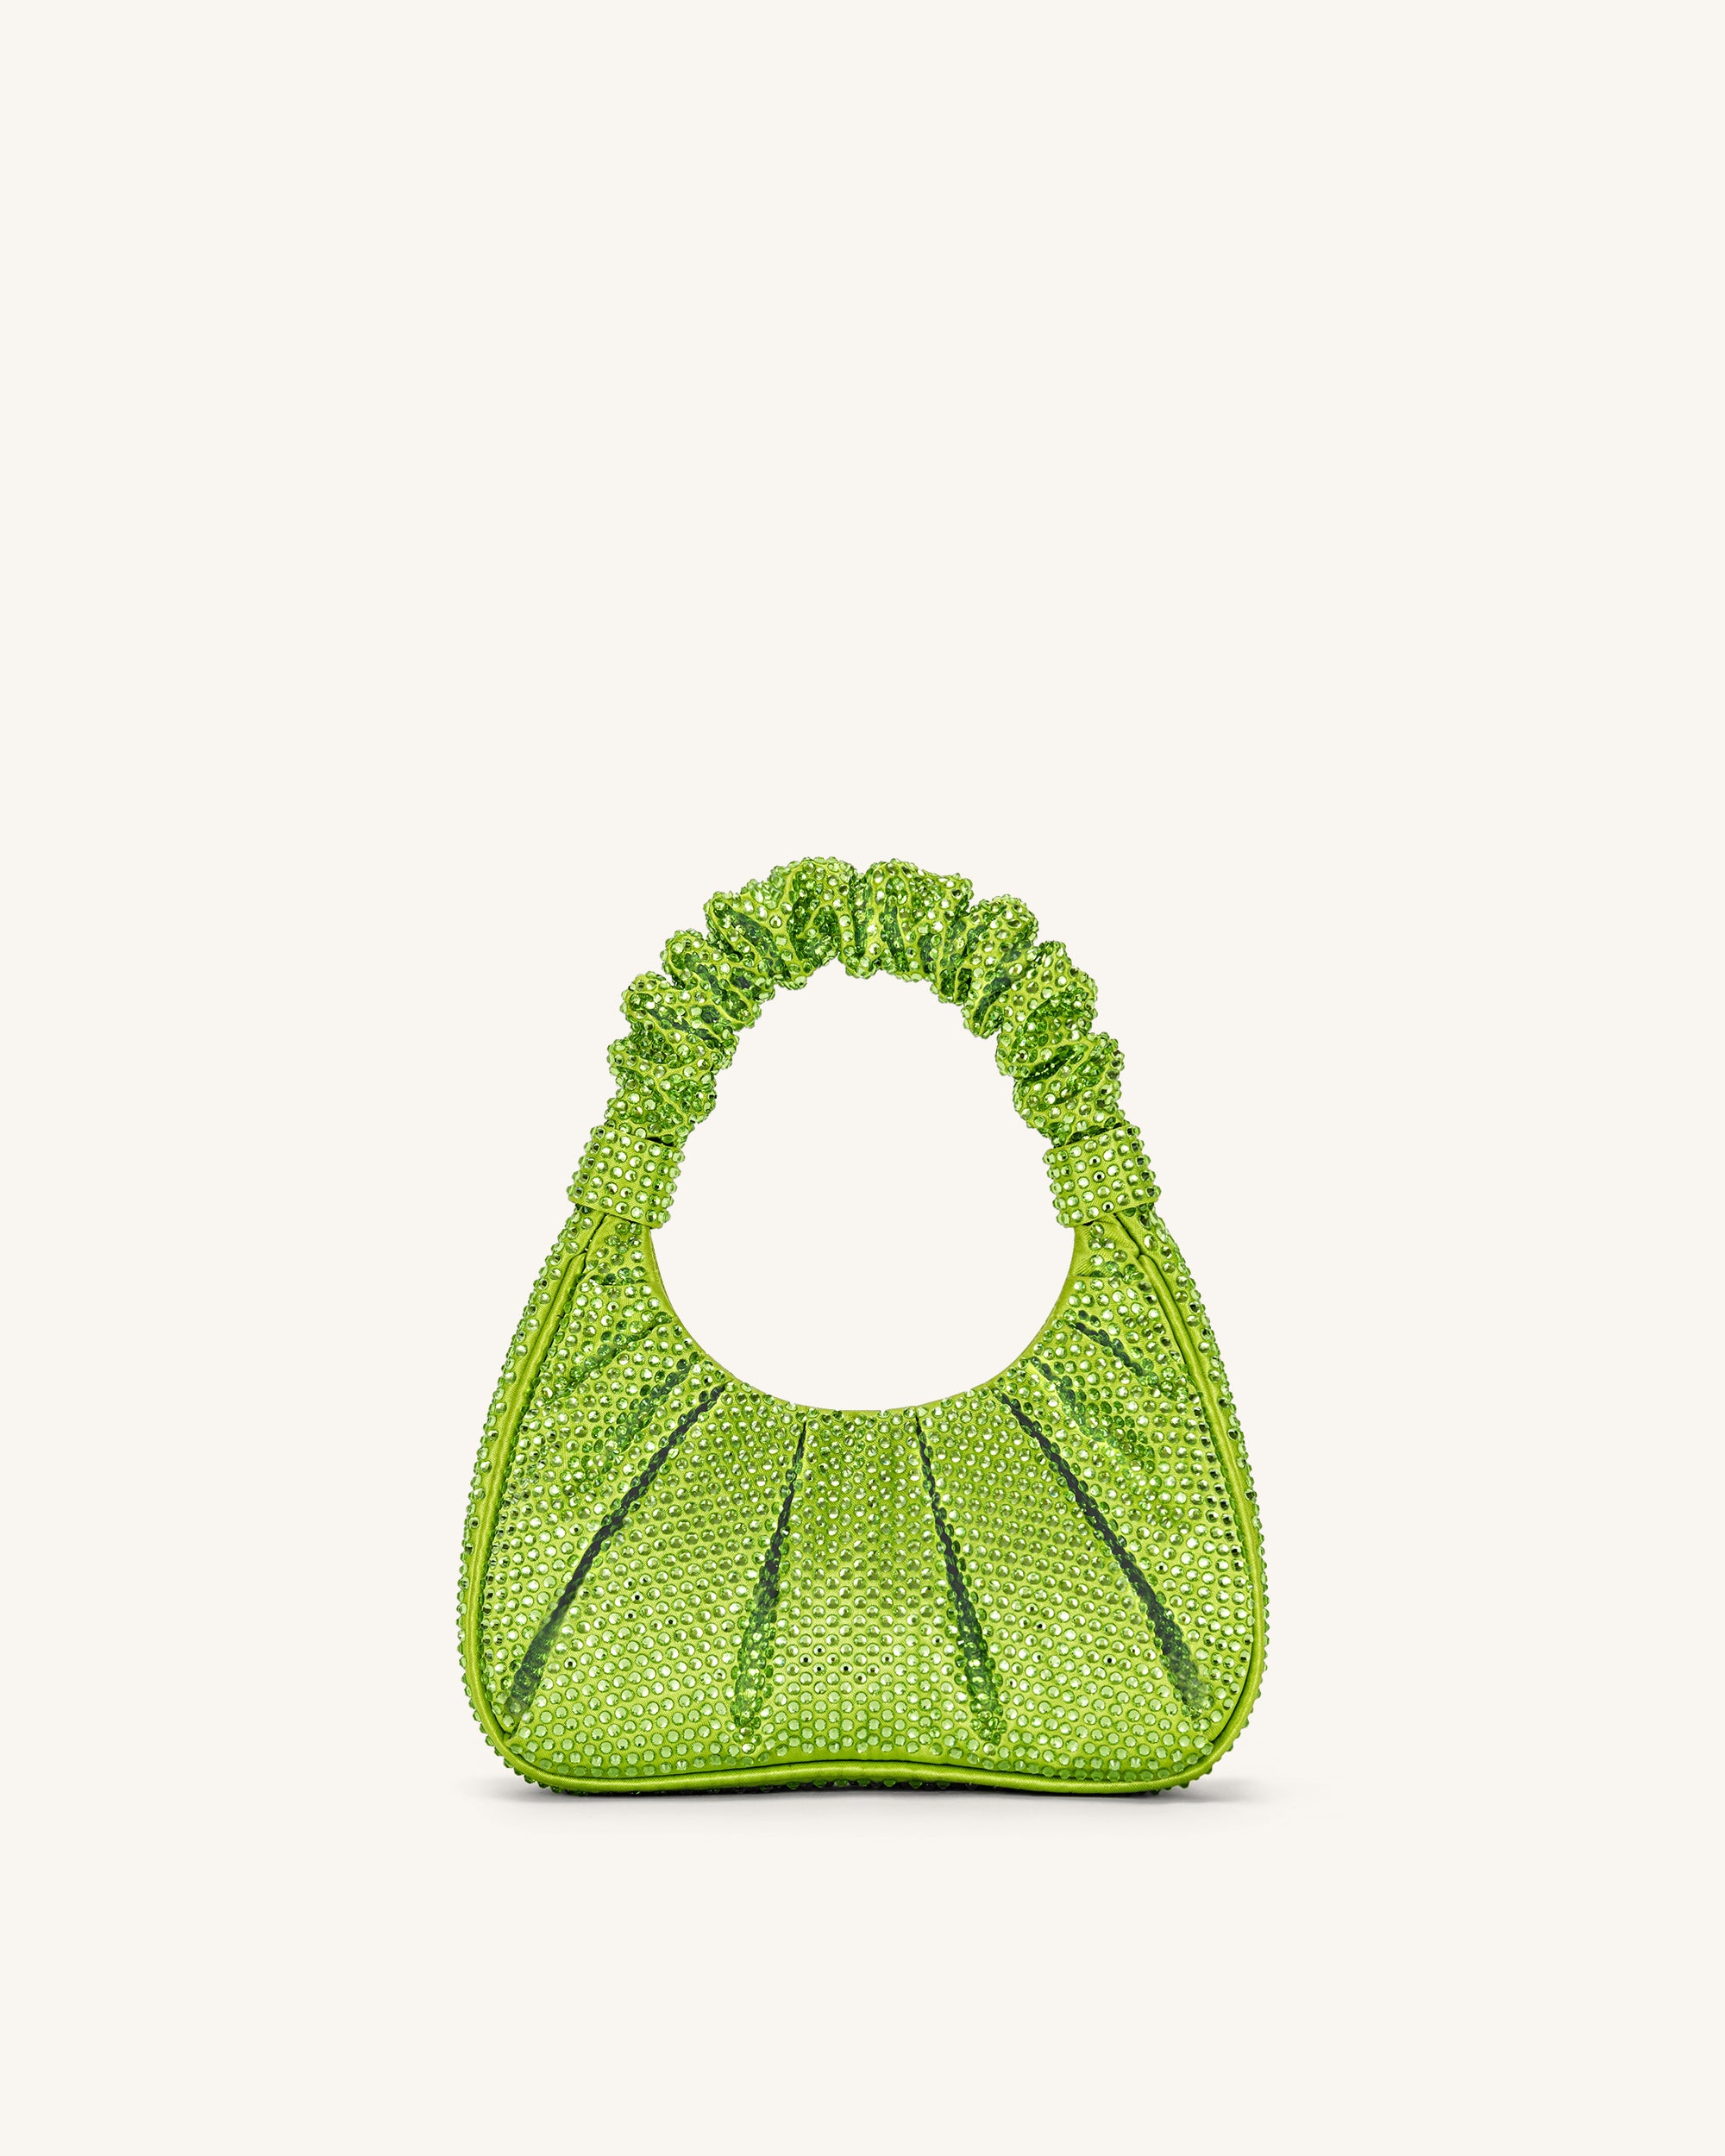 Green Handbag, Mondo, Purse, Large Bag, Hobo Bag, Shoulder Bag, Faux  Leather, Woman's Gift